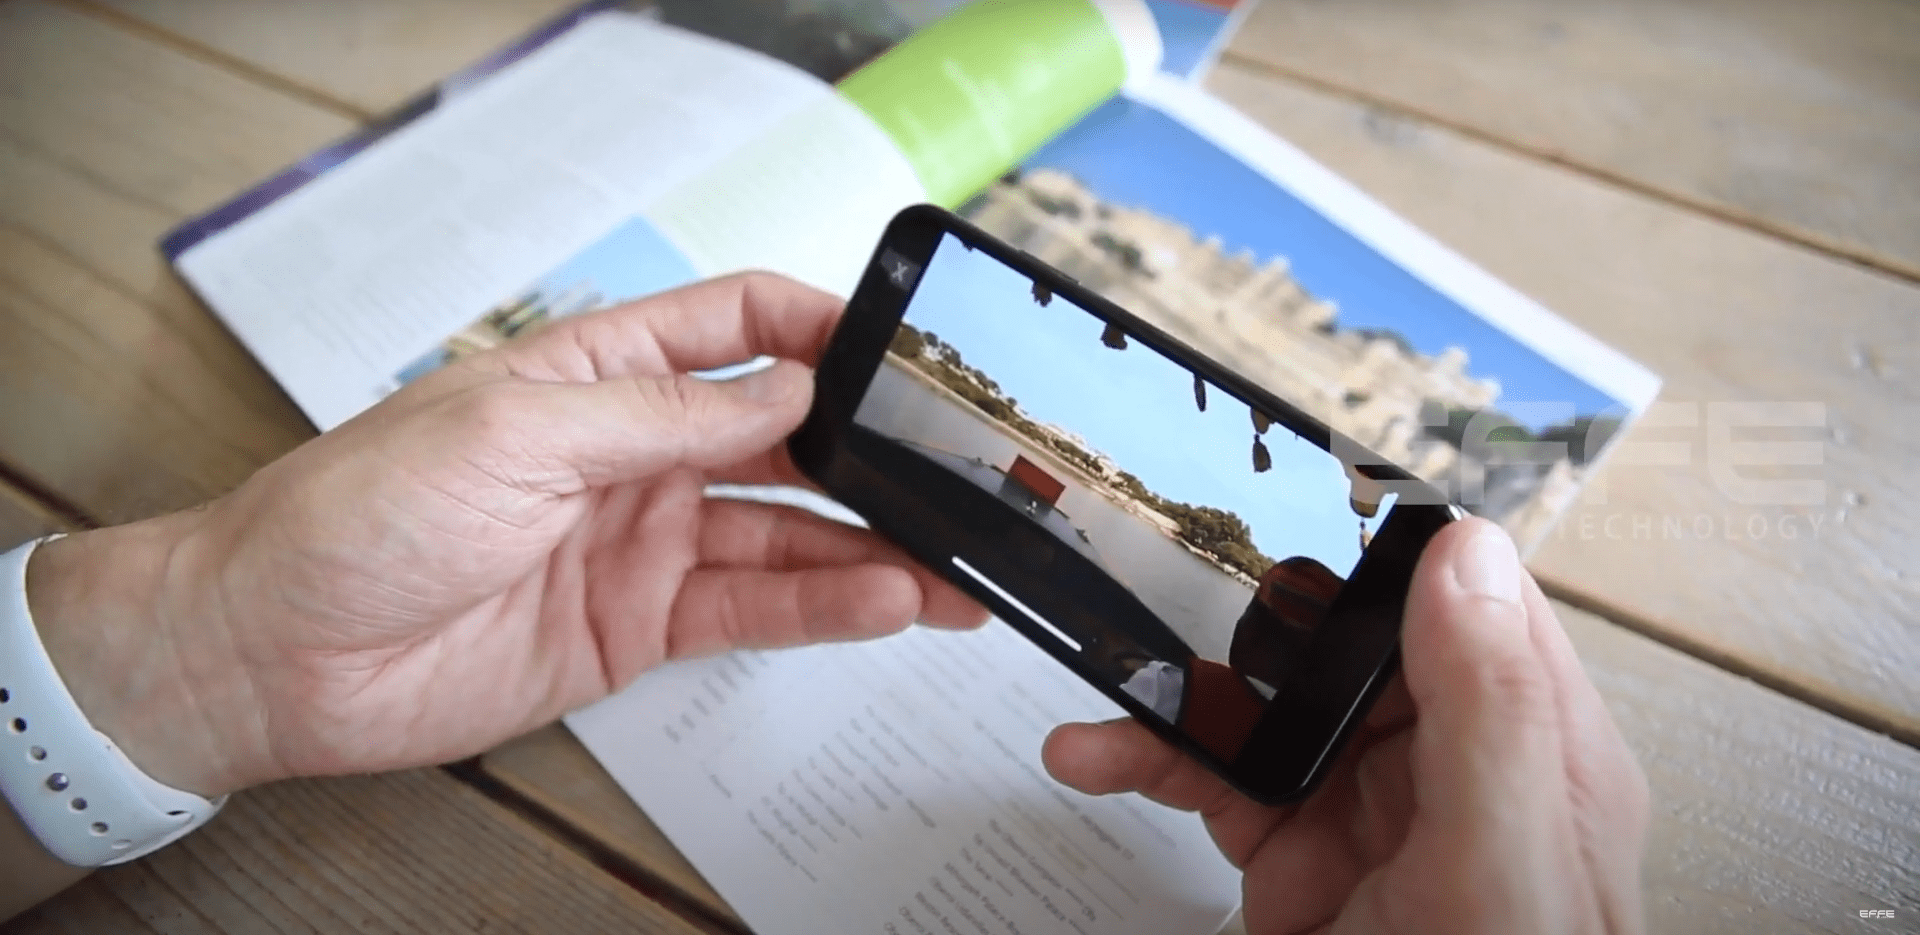 augmented reality tourism